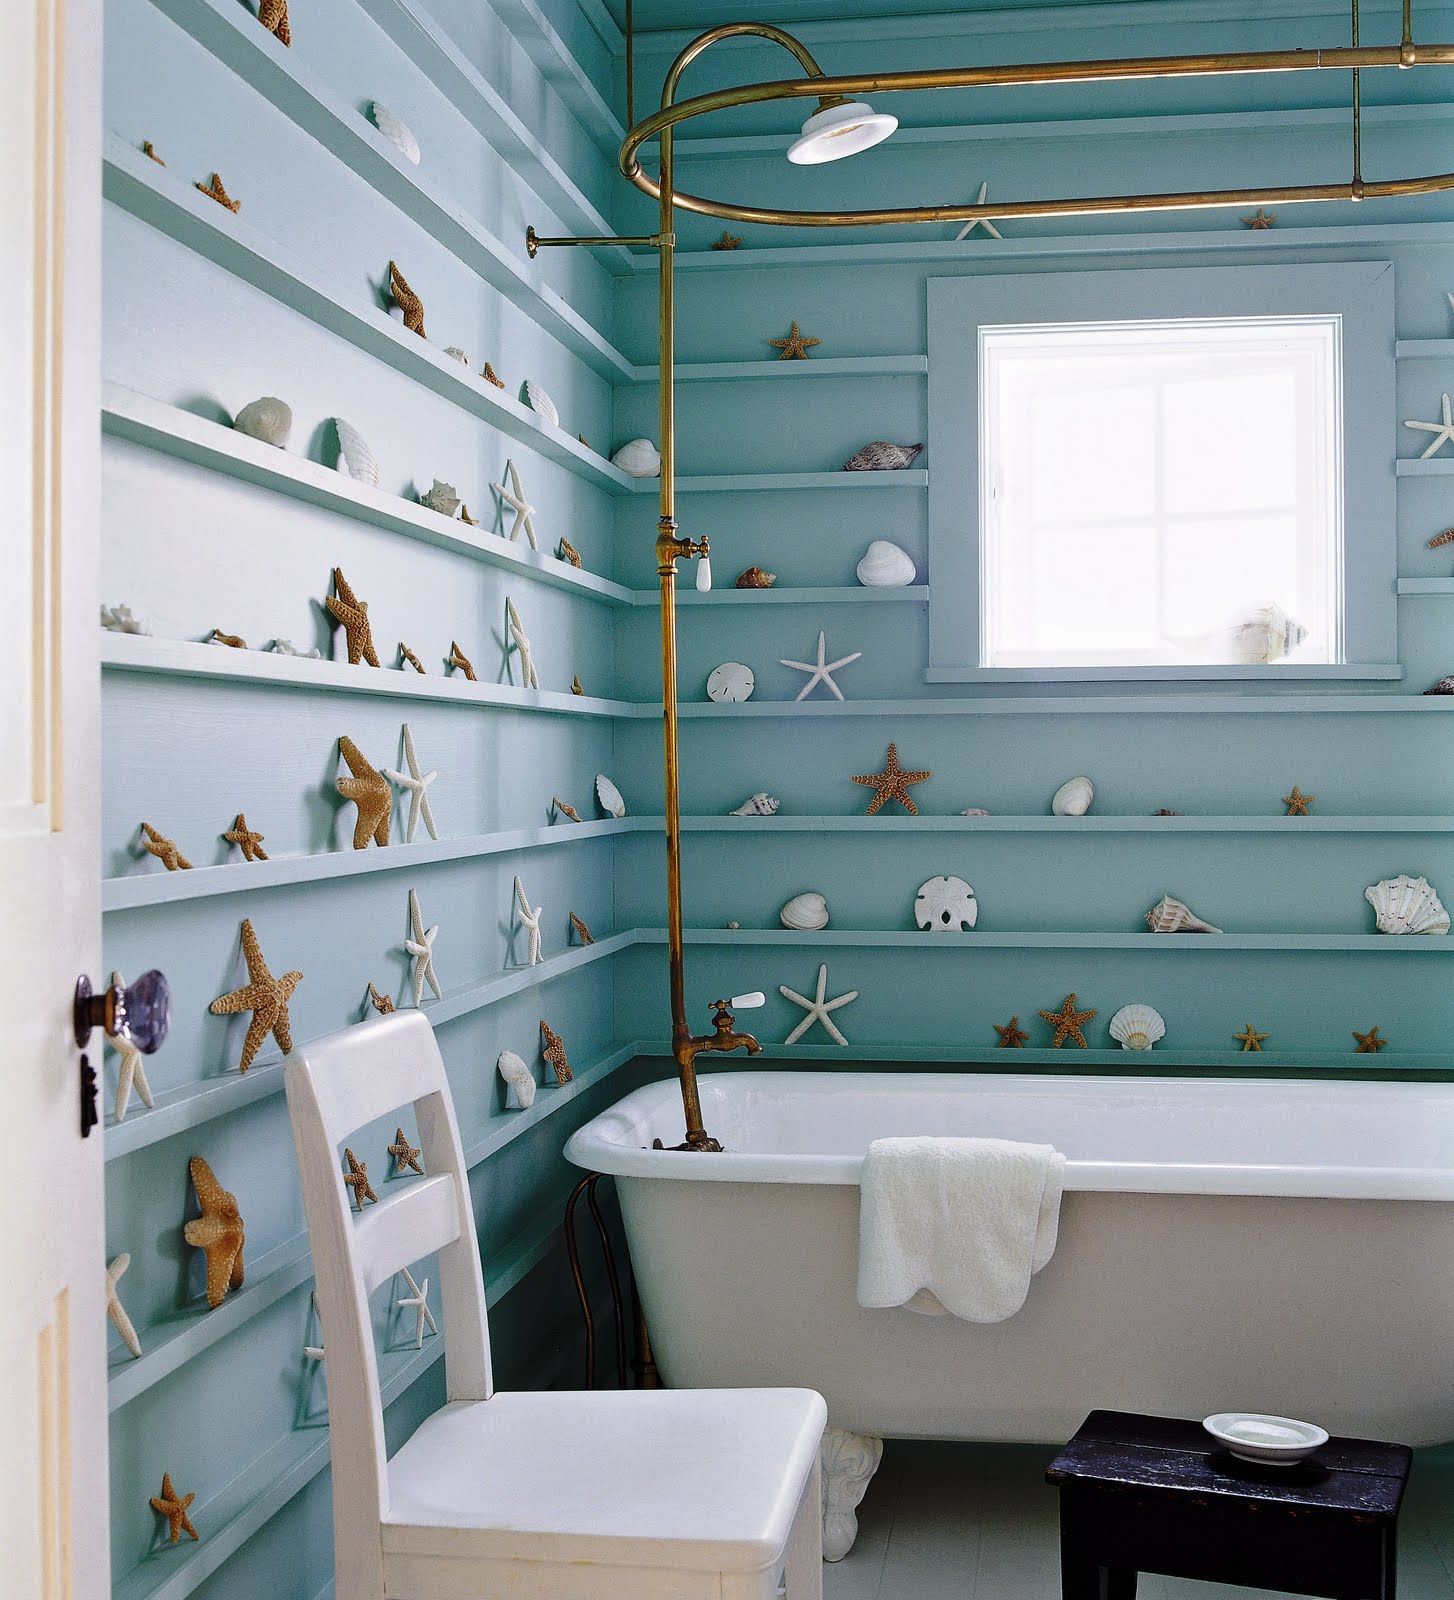 Shabby Chic Blonde: Home Decor Inspiration-A Fun Beach Bathroom the small shelve